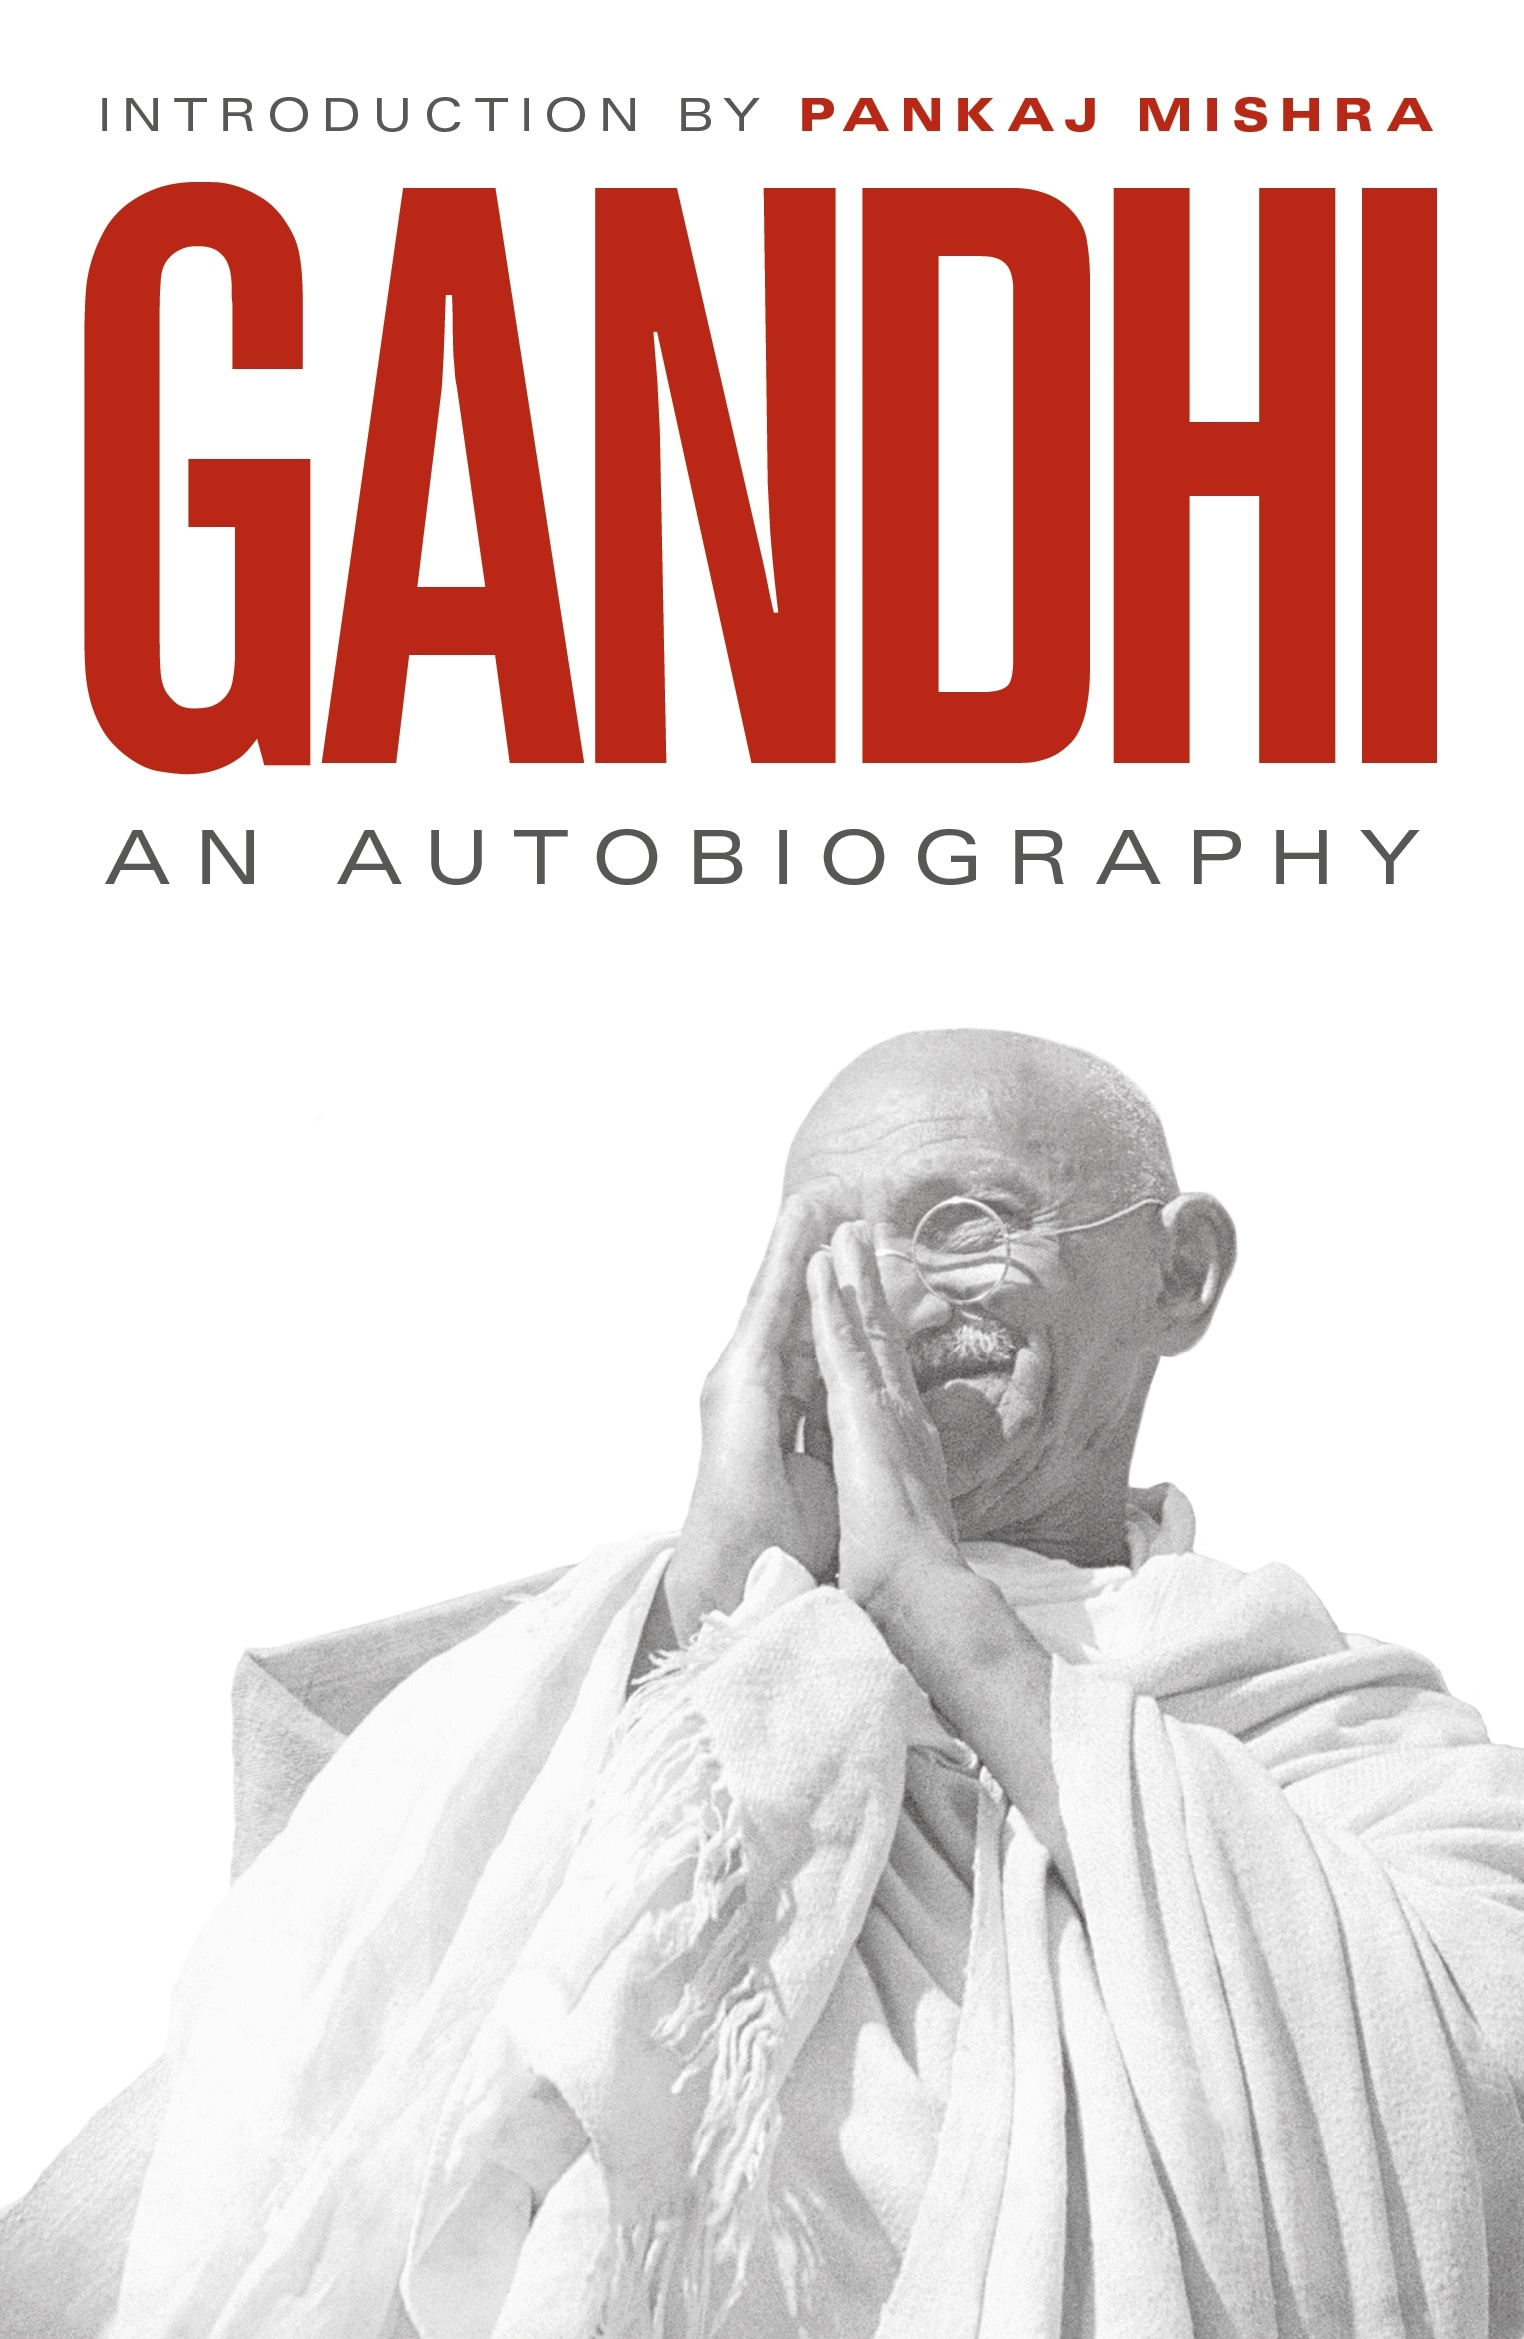 Book “An Autobiography” by M. K. Gandhi, Pankaj Mishra — September 12, 2019